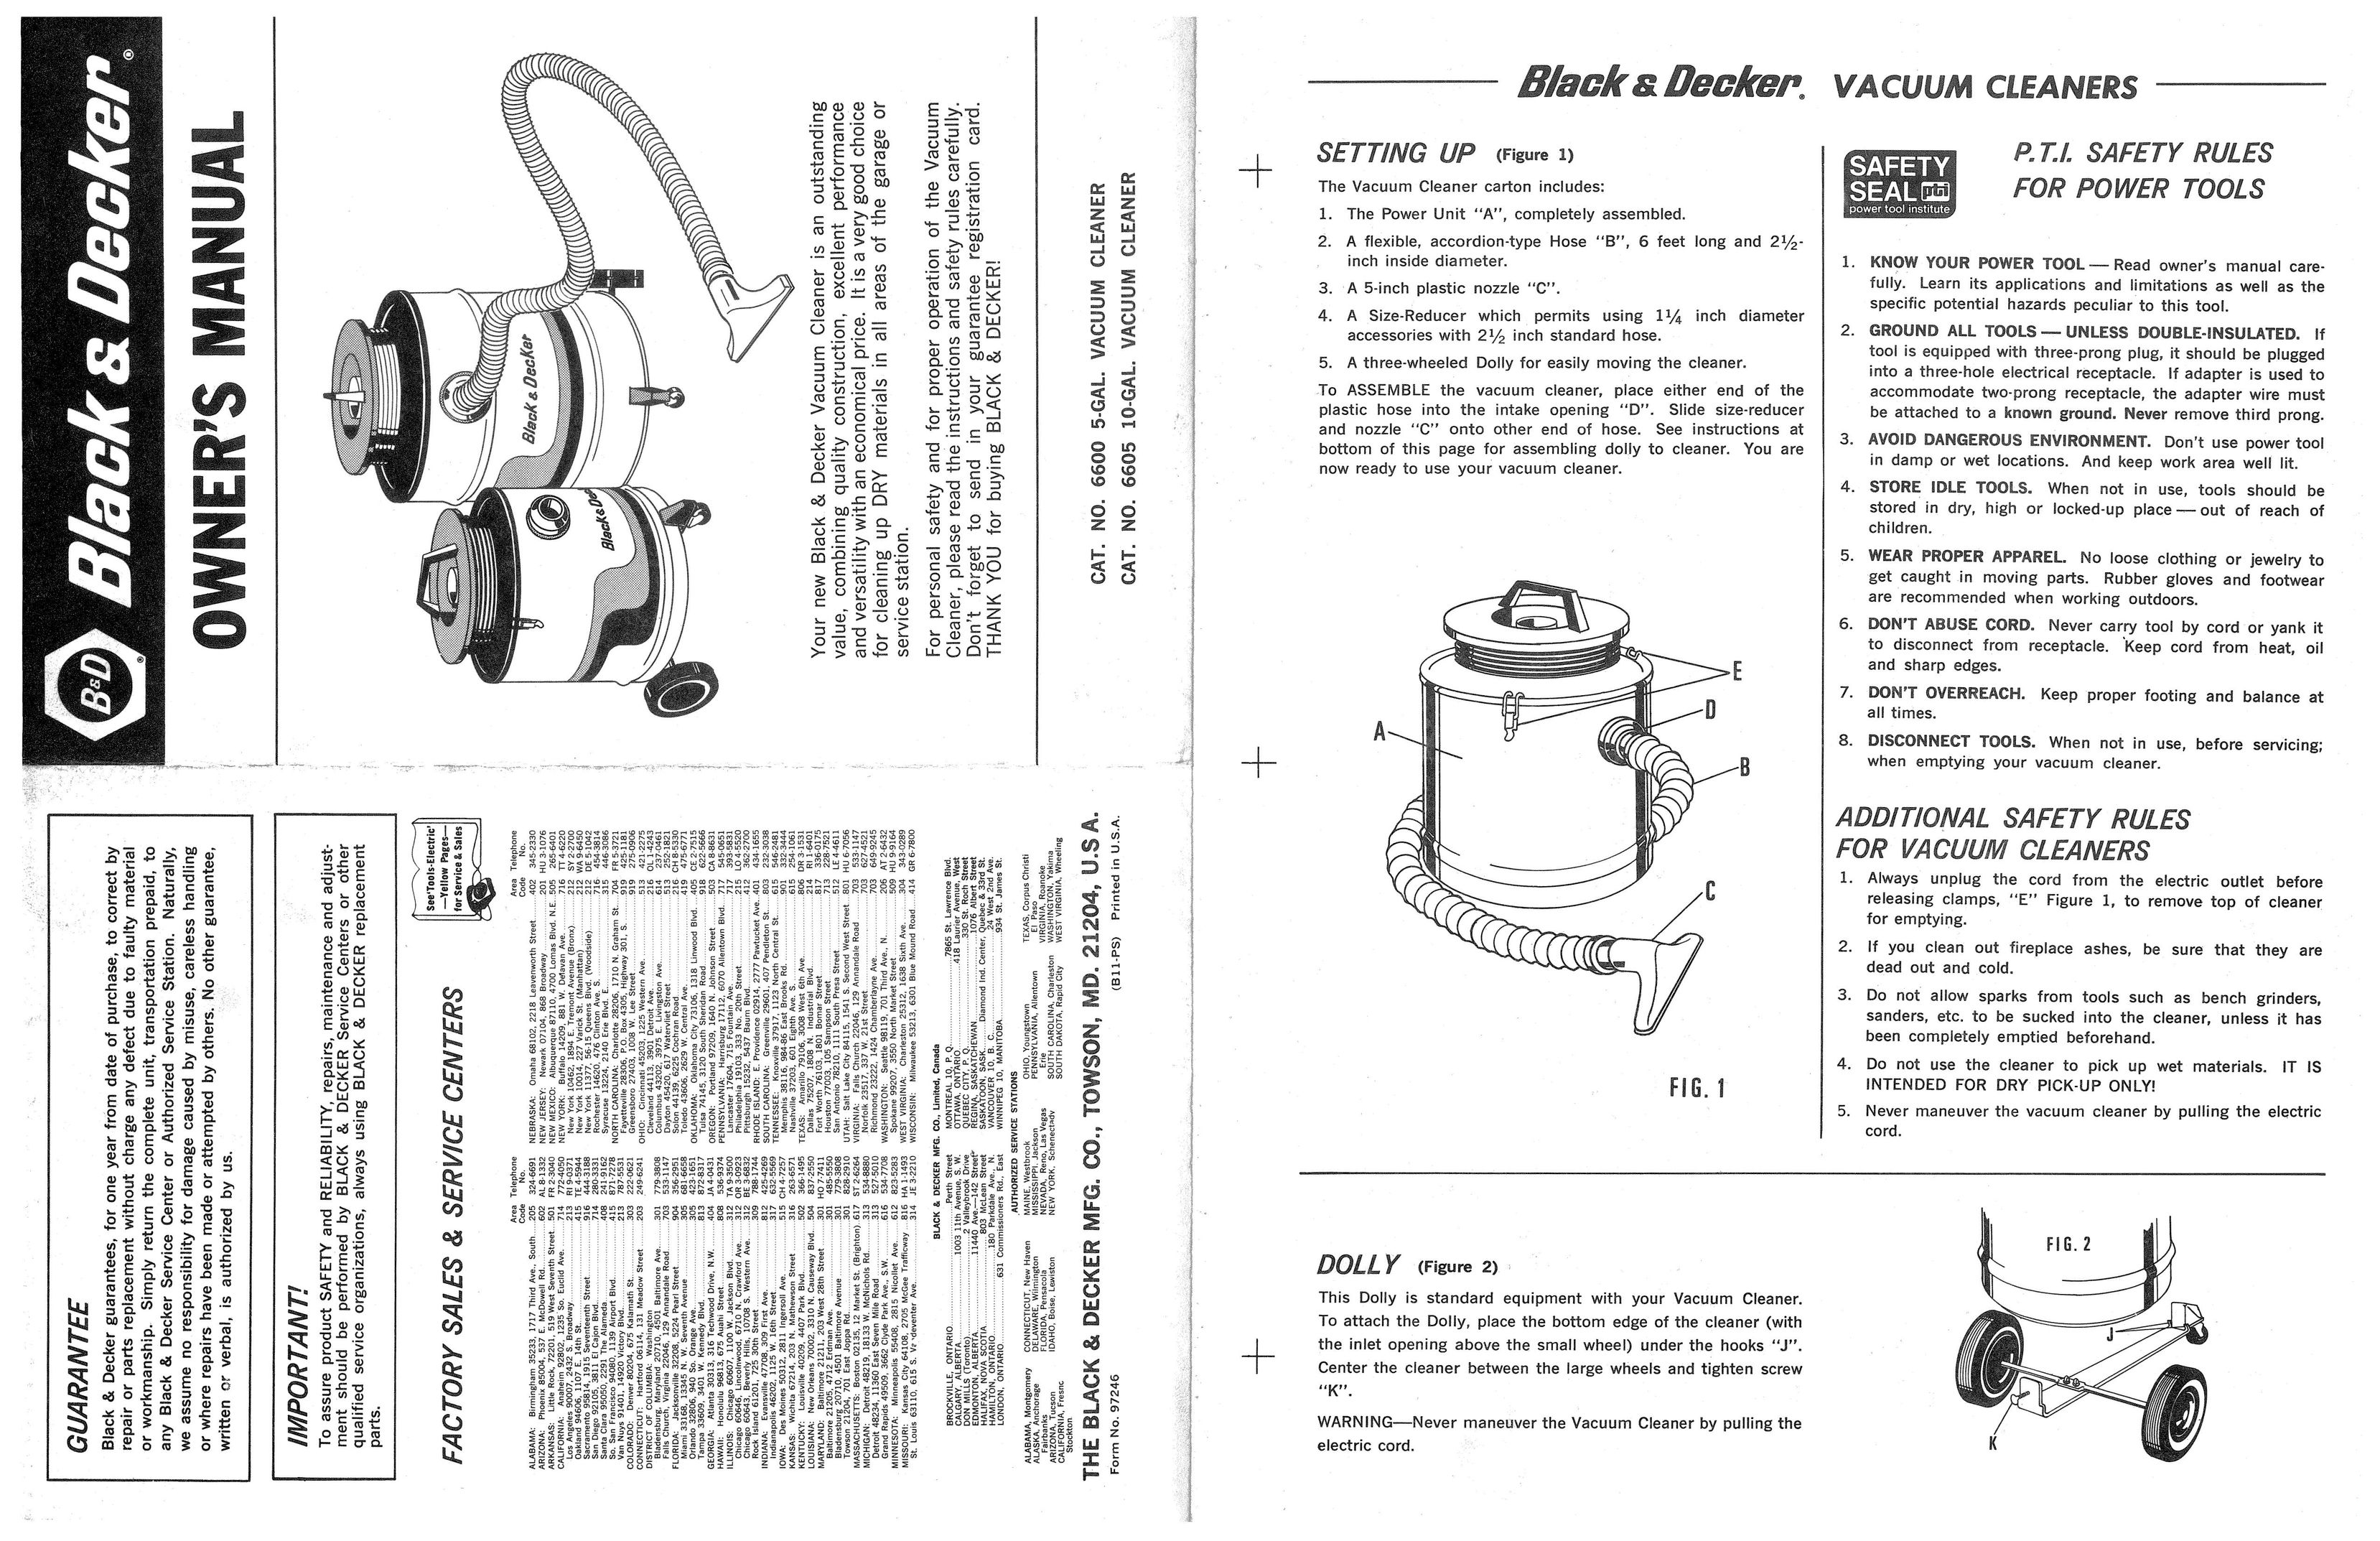 Black & Decker 6605 Vacuum Cleaner User Manual